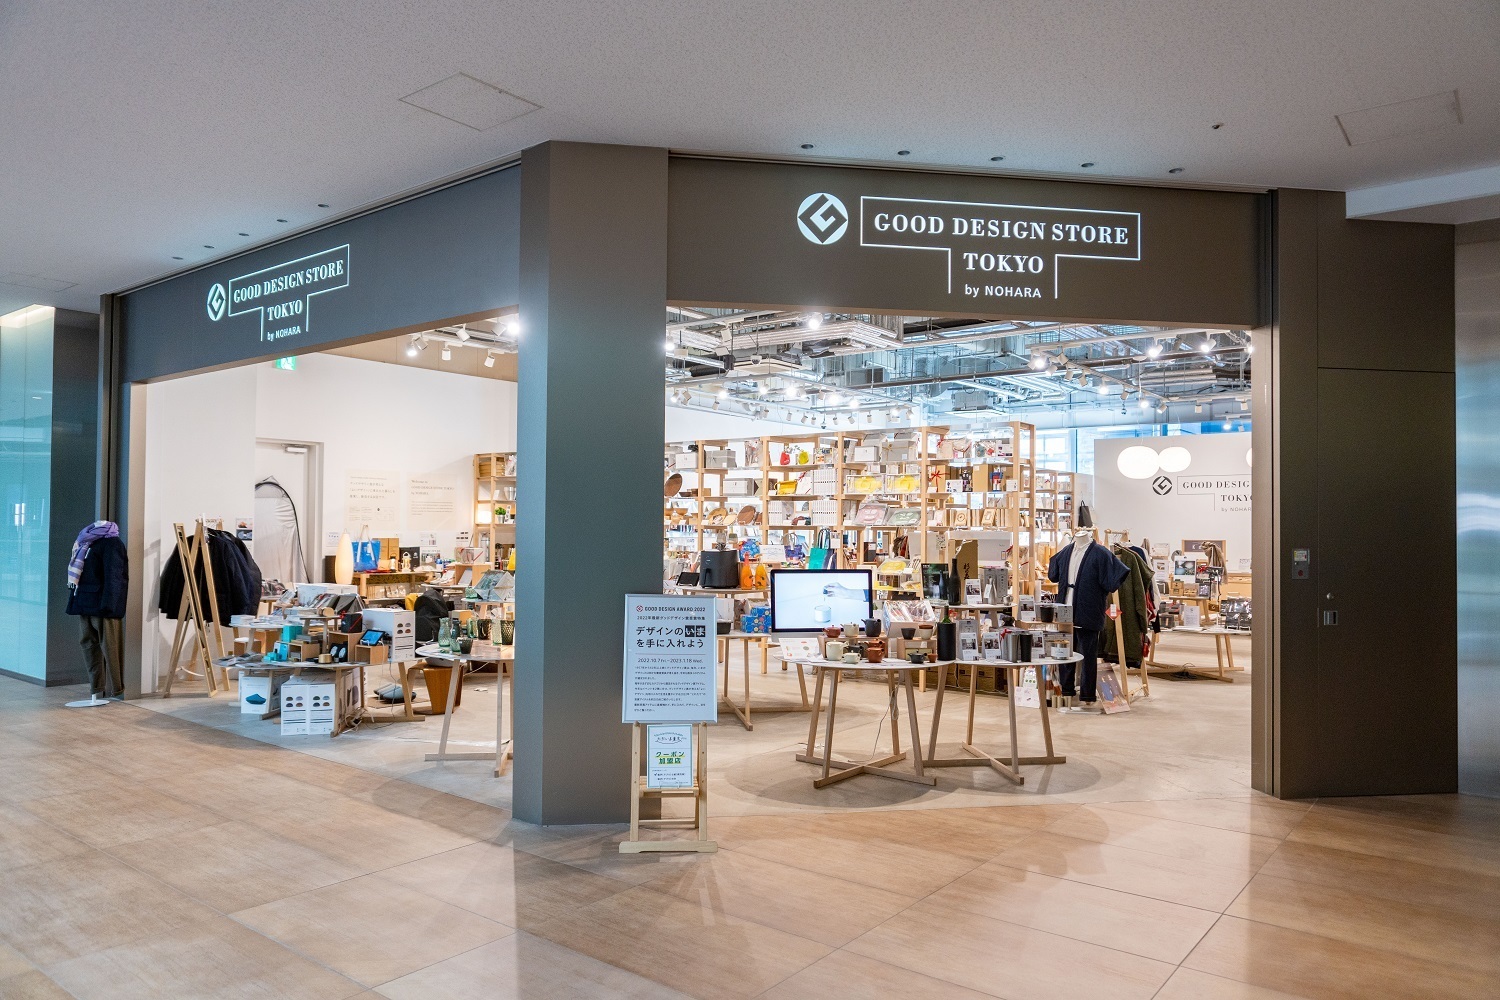 Good Design Store Tokyo by NOHARA